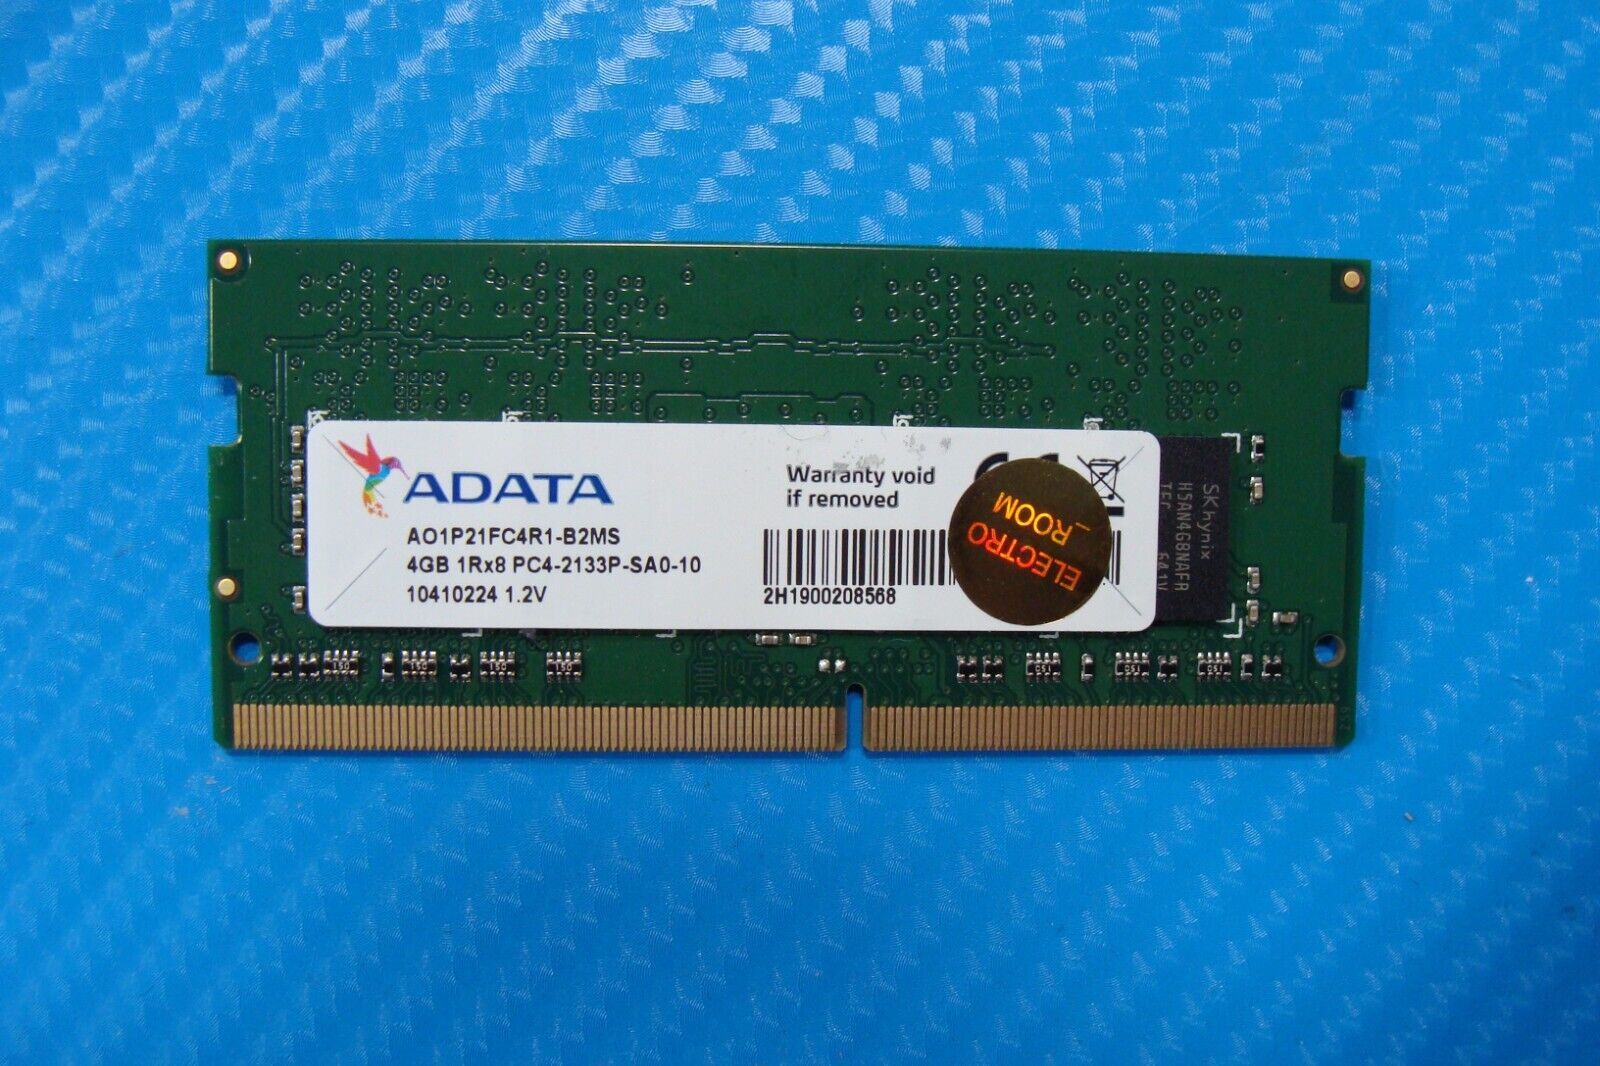 Acer A515-51-3509 ADATA 4GB 1Rx8 PC4-2133P Memory RAM SO-DIMM AO1P21FC4R1-B2MS